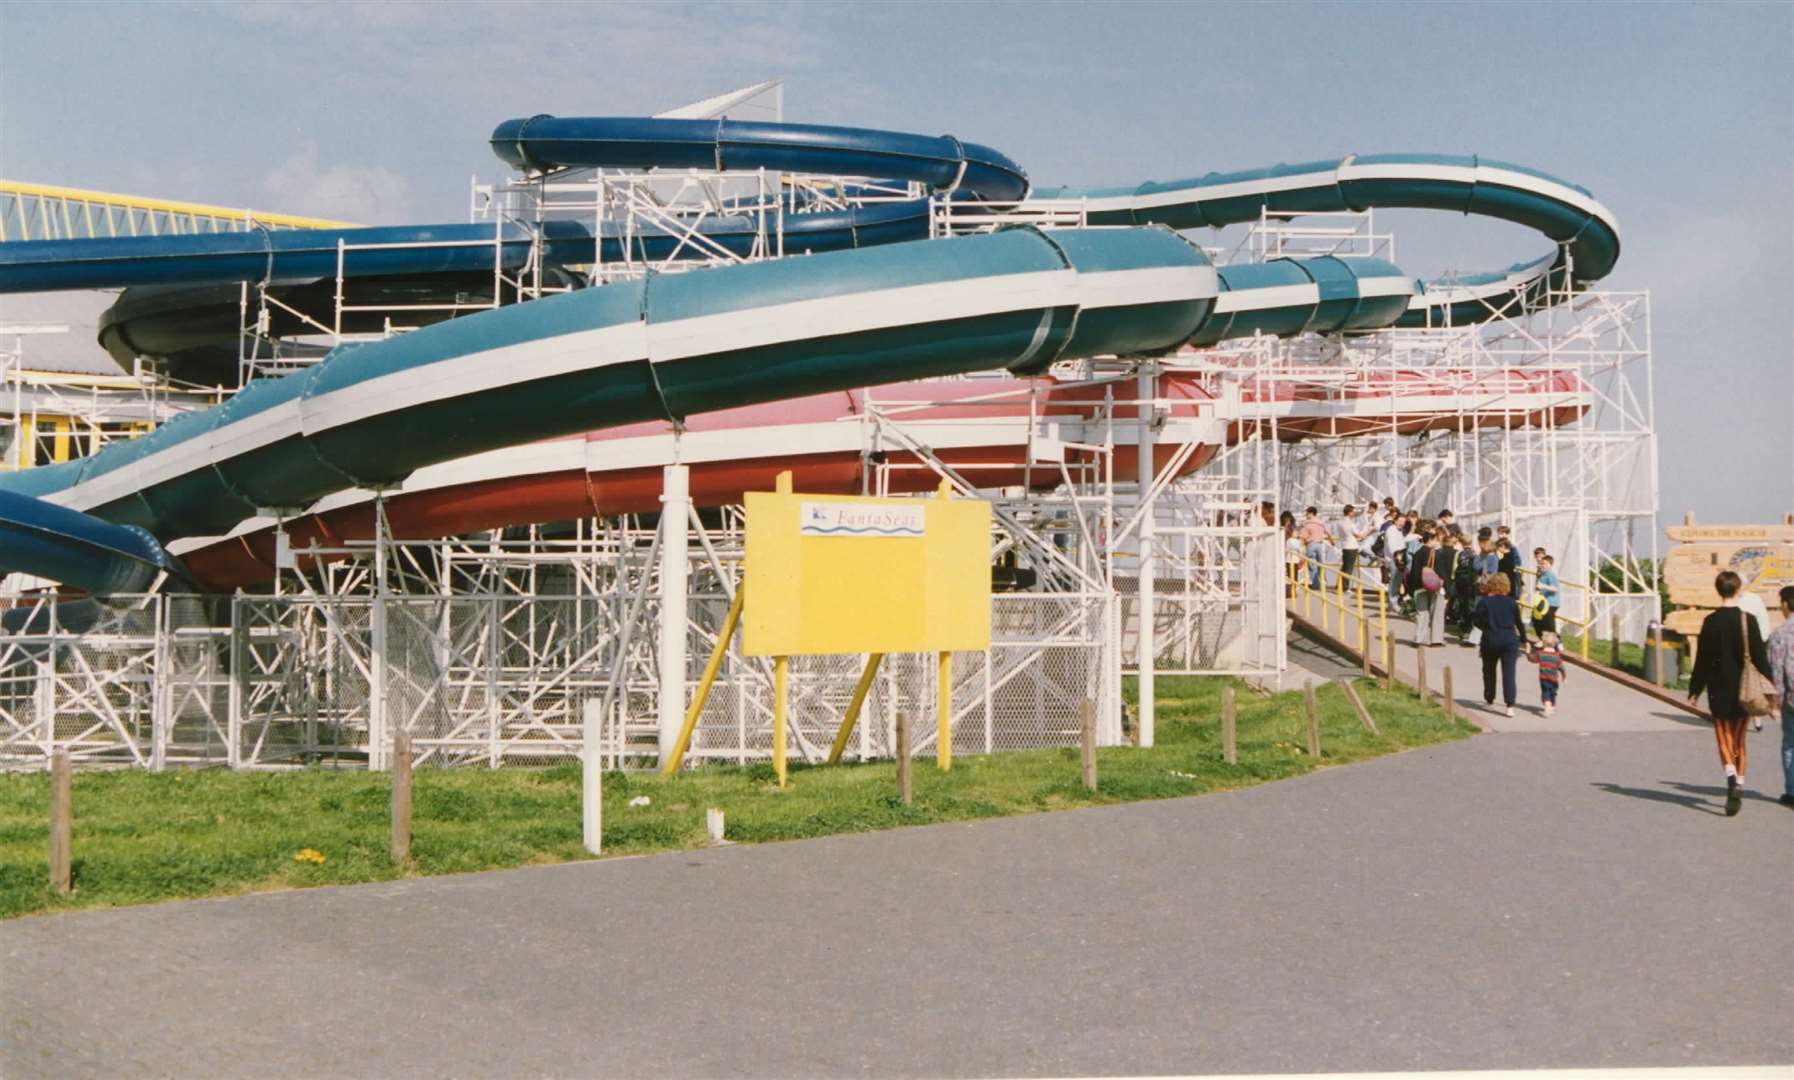 Fantasea Water Park was a popular attraction in Dartford until its closure in 1992